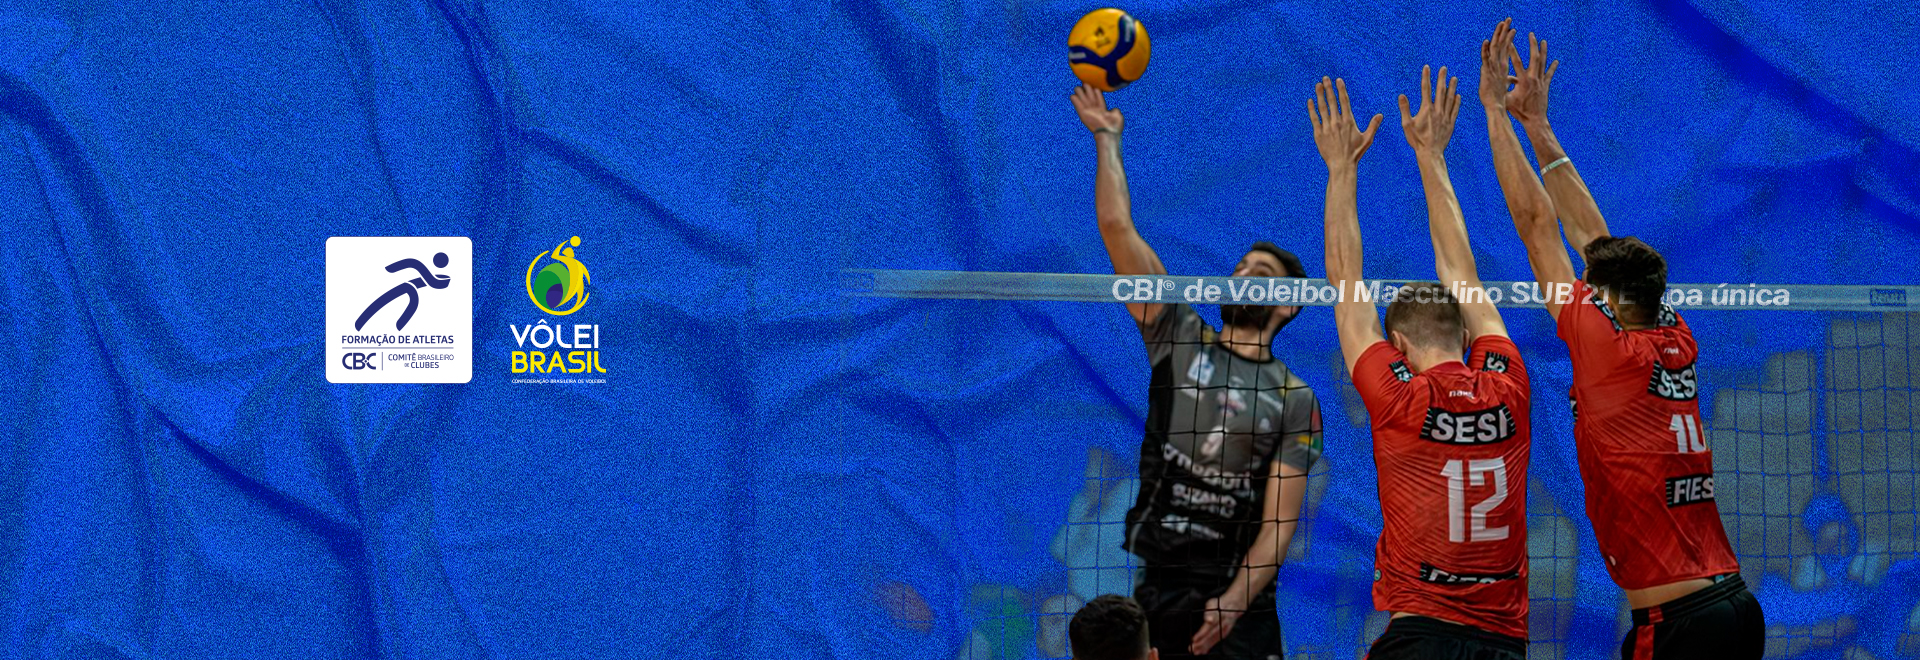 Sesi-SP conquista o CBI® de Voleibol Masculino Sub 21